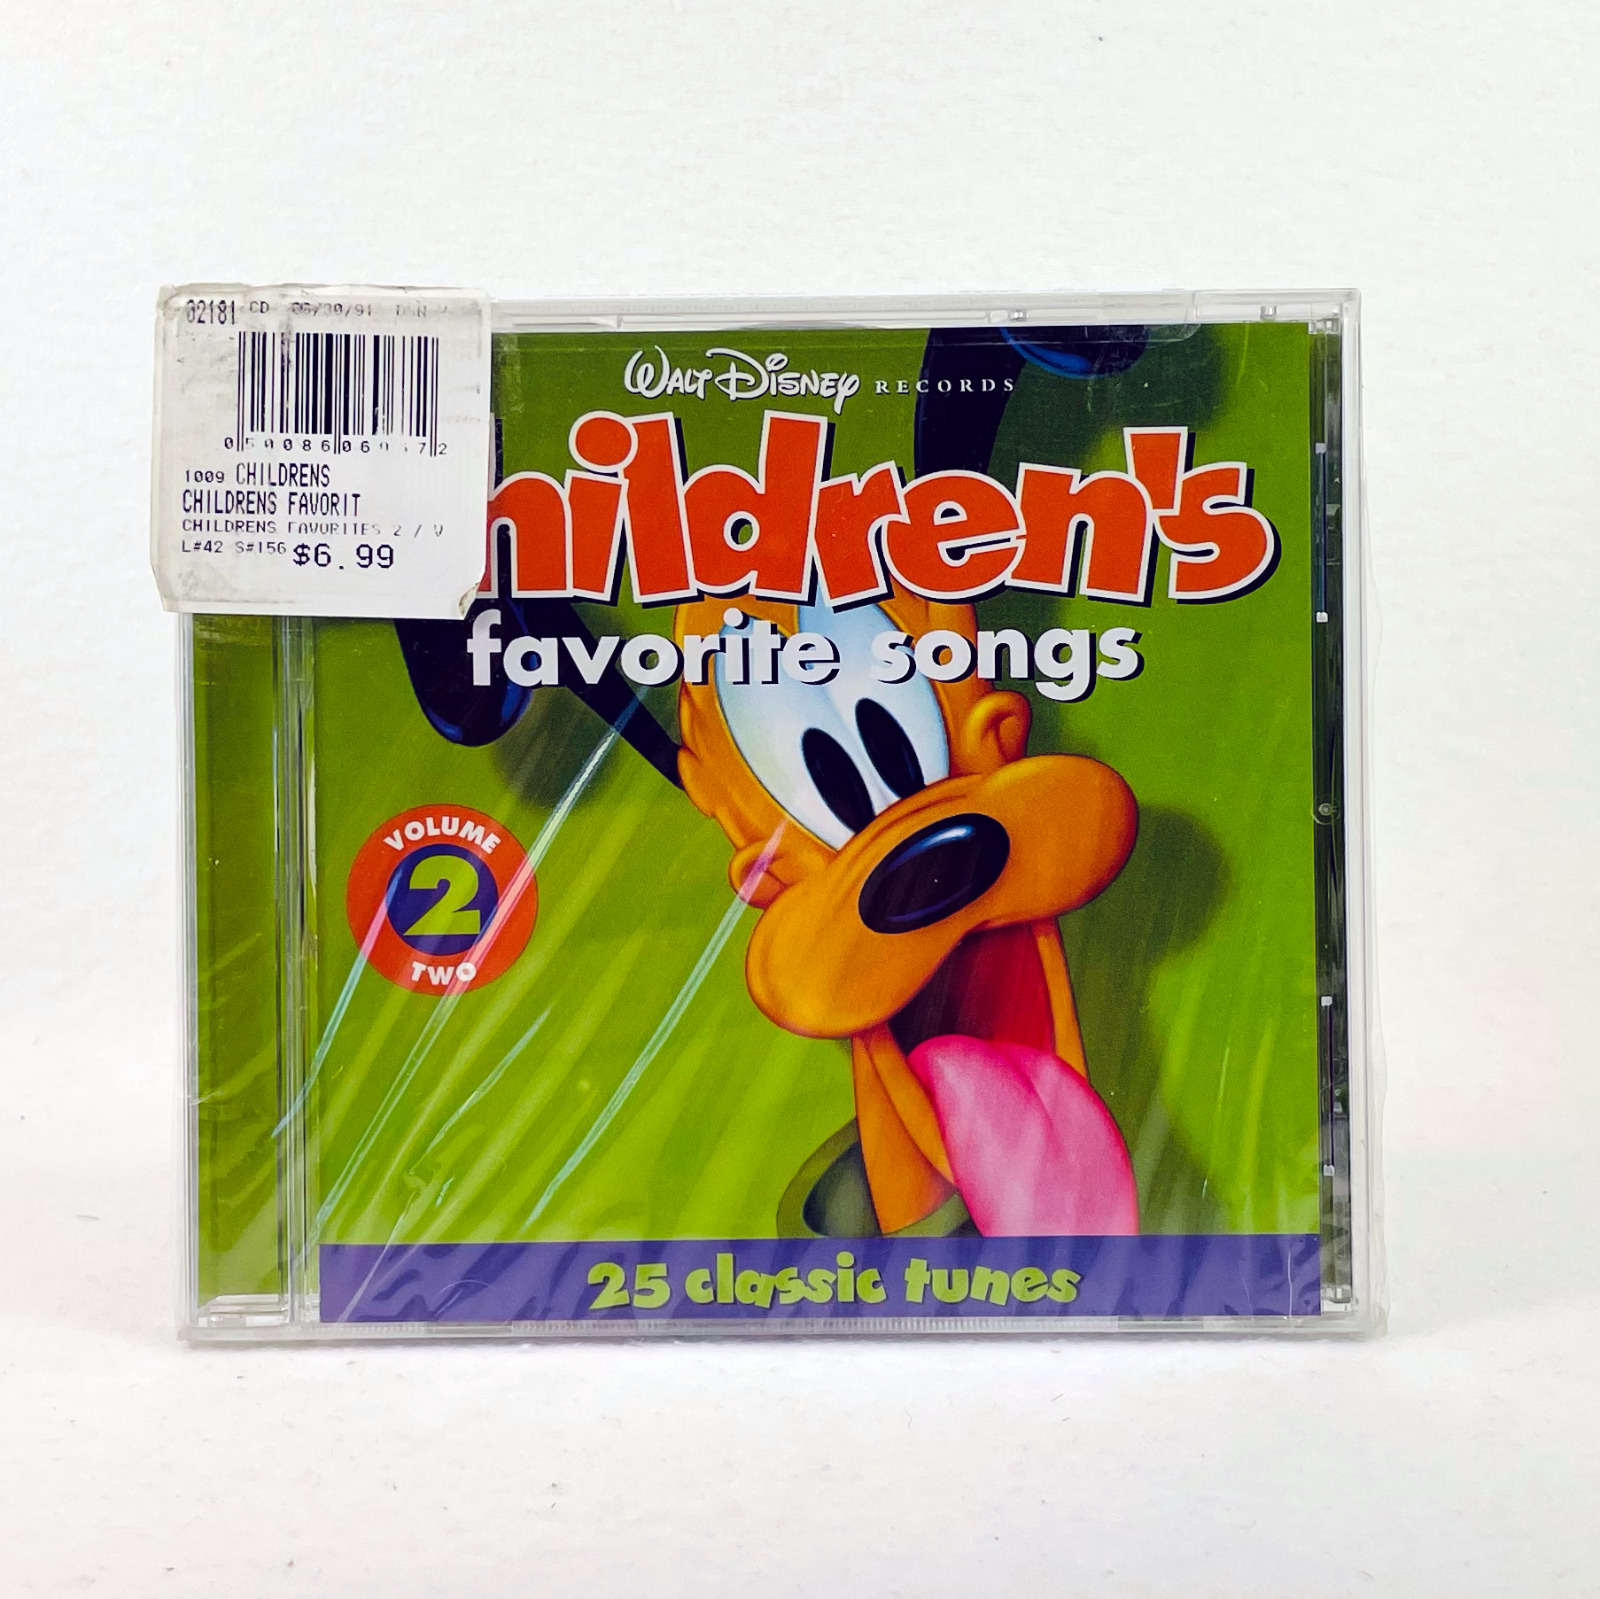 NEW Walt Disney Records Children's Favorite Songs Volume 2 CD 25 Classic Tunes